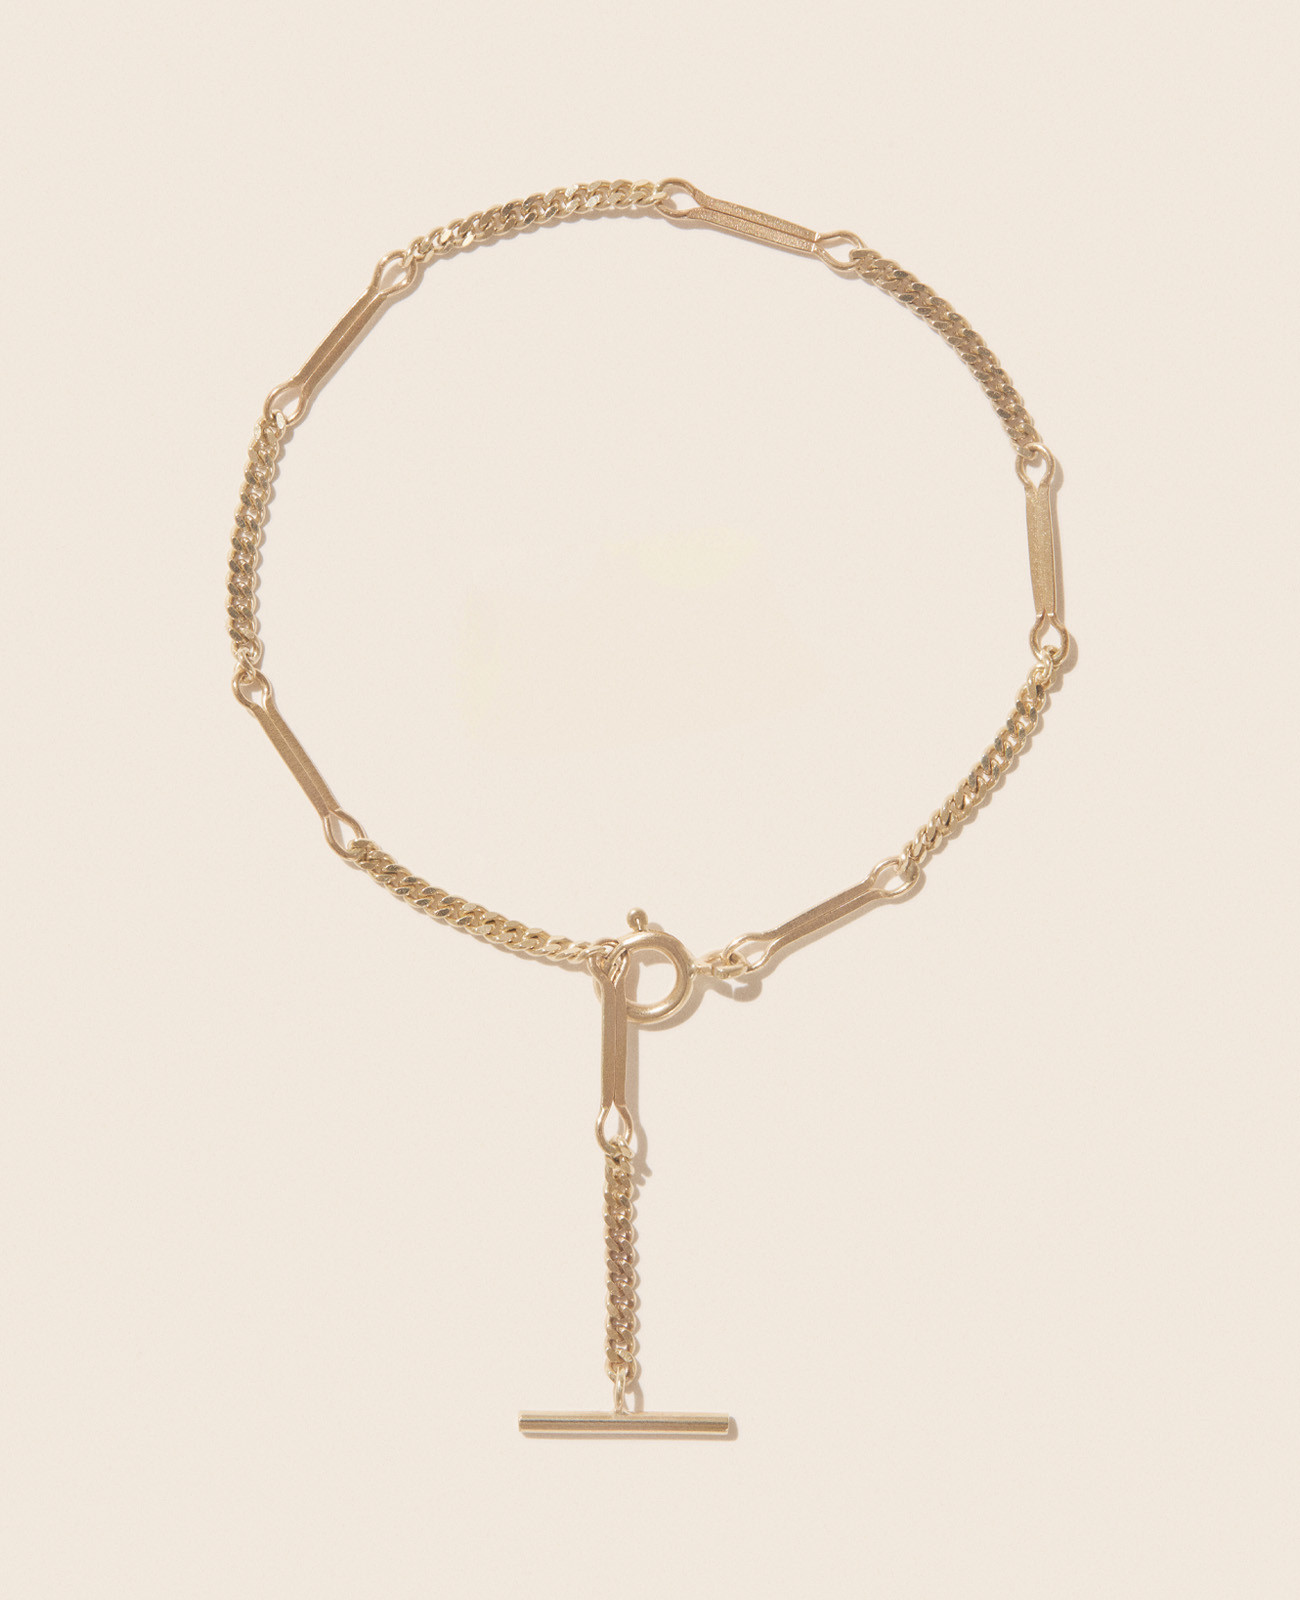 PETRA N°2 bracelet pascale monvoisin jewelry paris